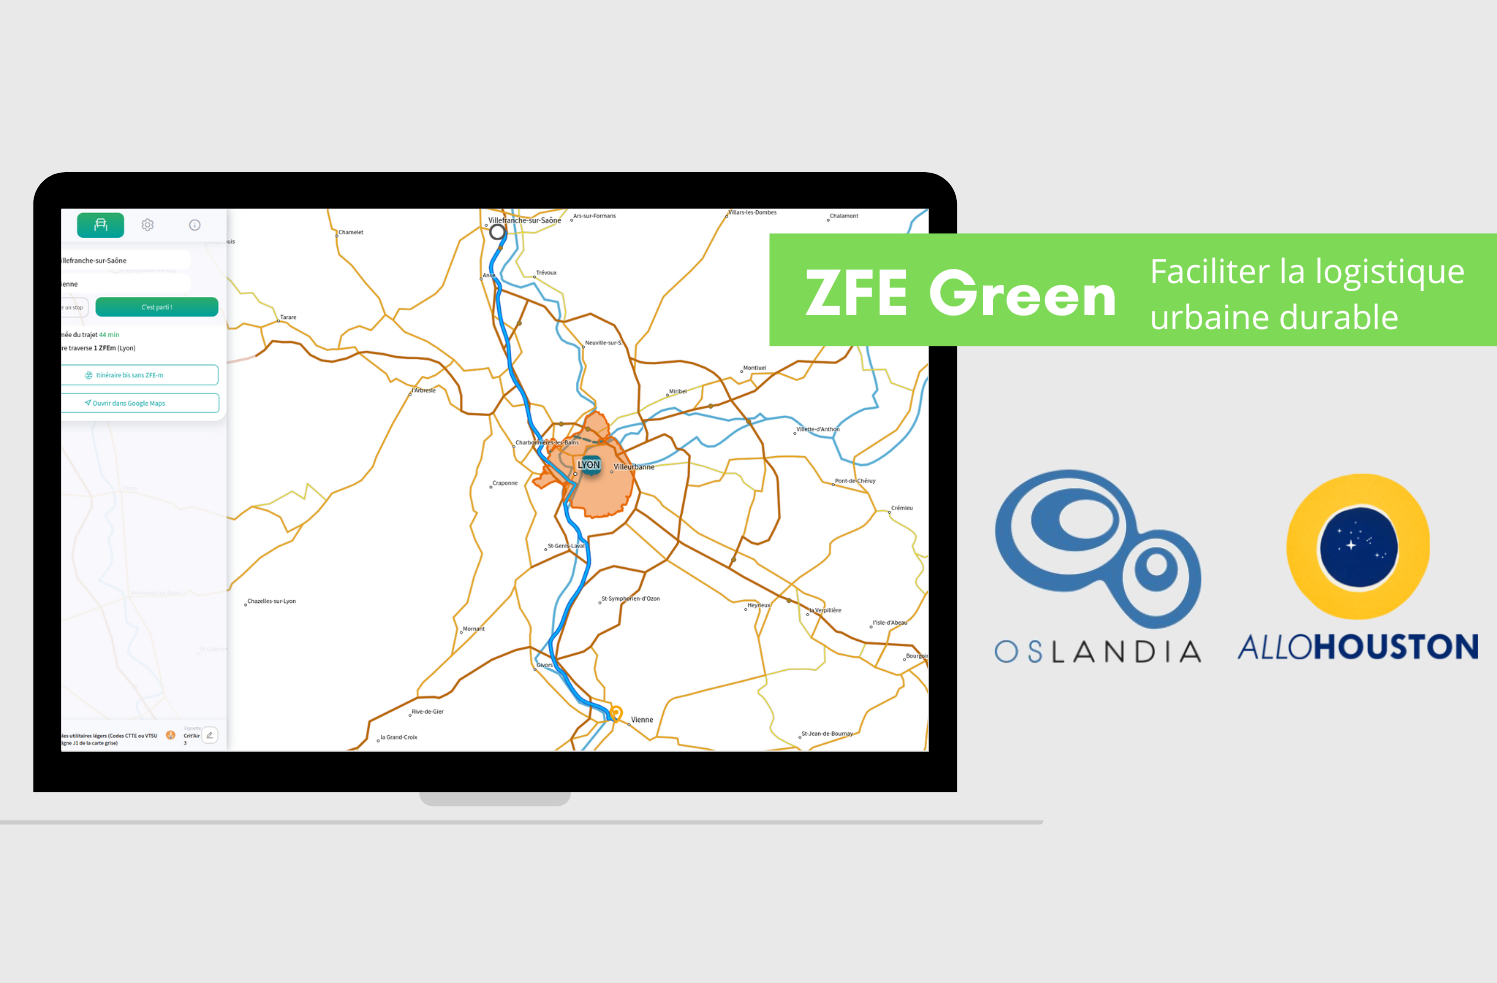 (Fr) ZFE.green, faciliter la logistique urbaine durable